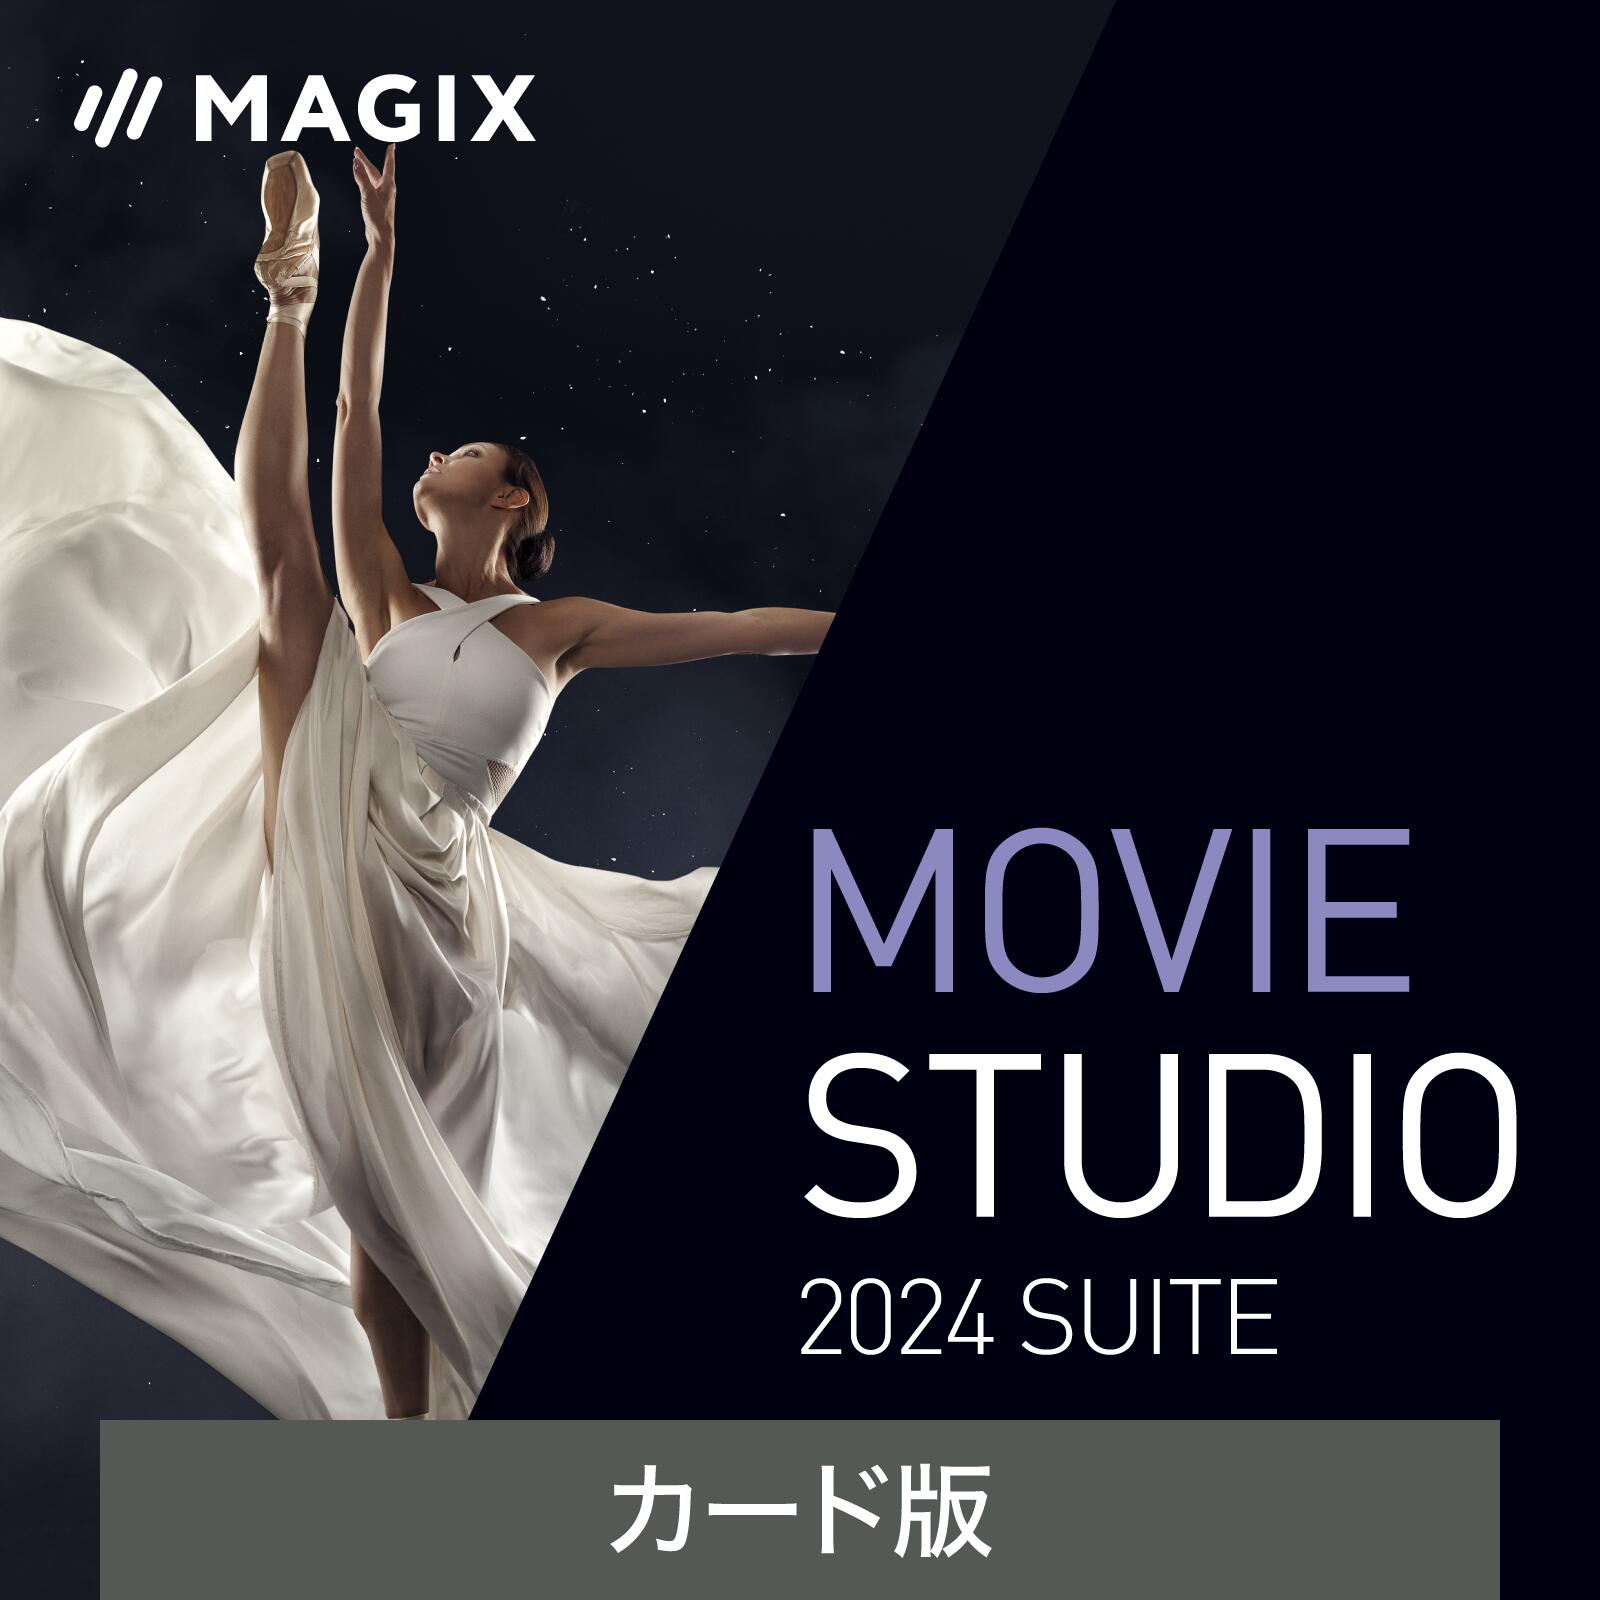 Movie Studio 2024 Suite J[h(ŐV) b rfIҏW\tg b ŏʔ b WinΉ